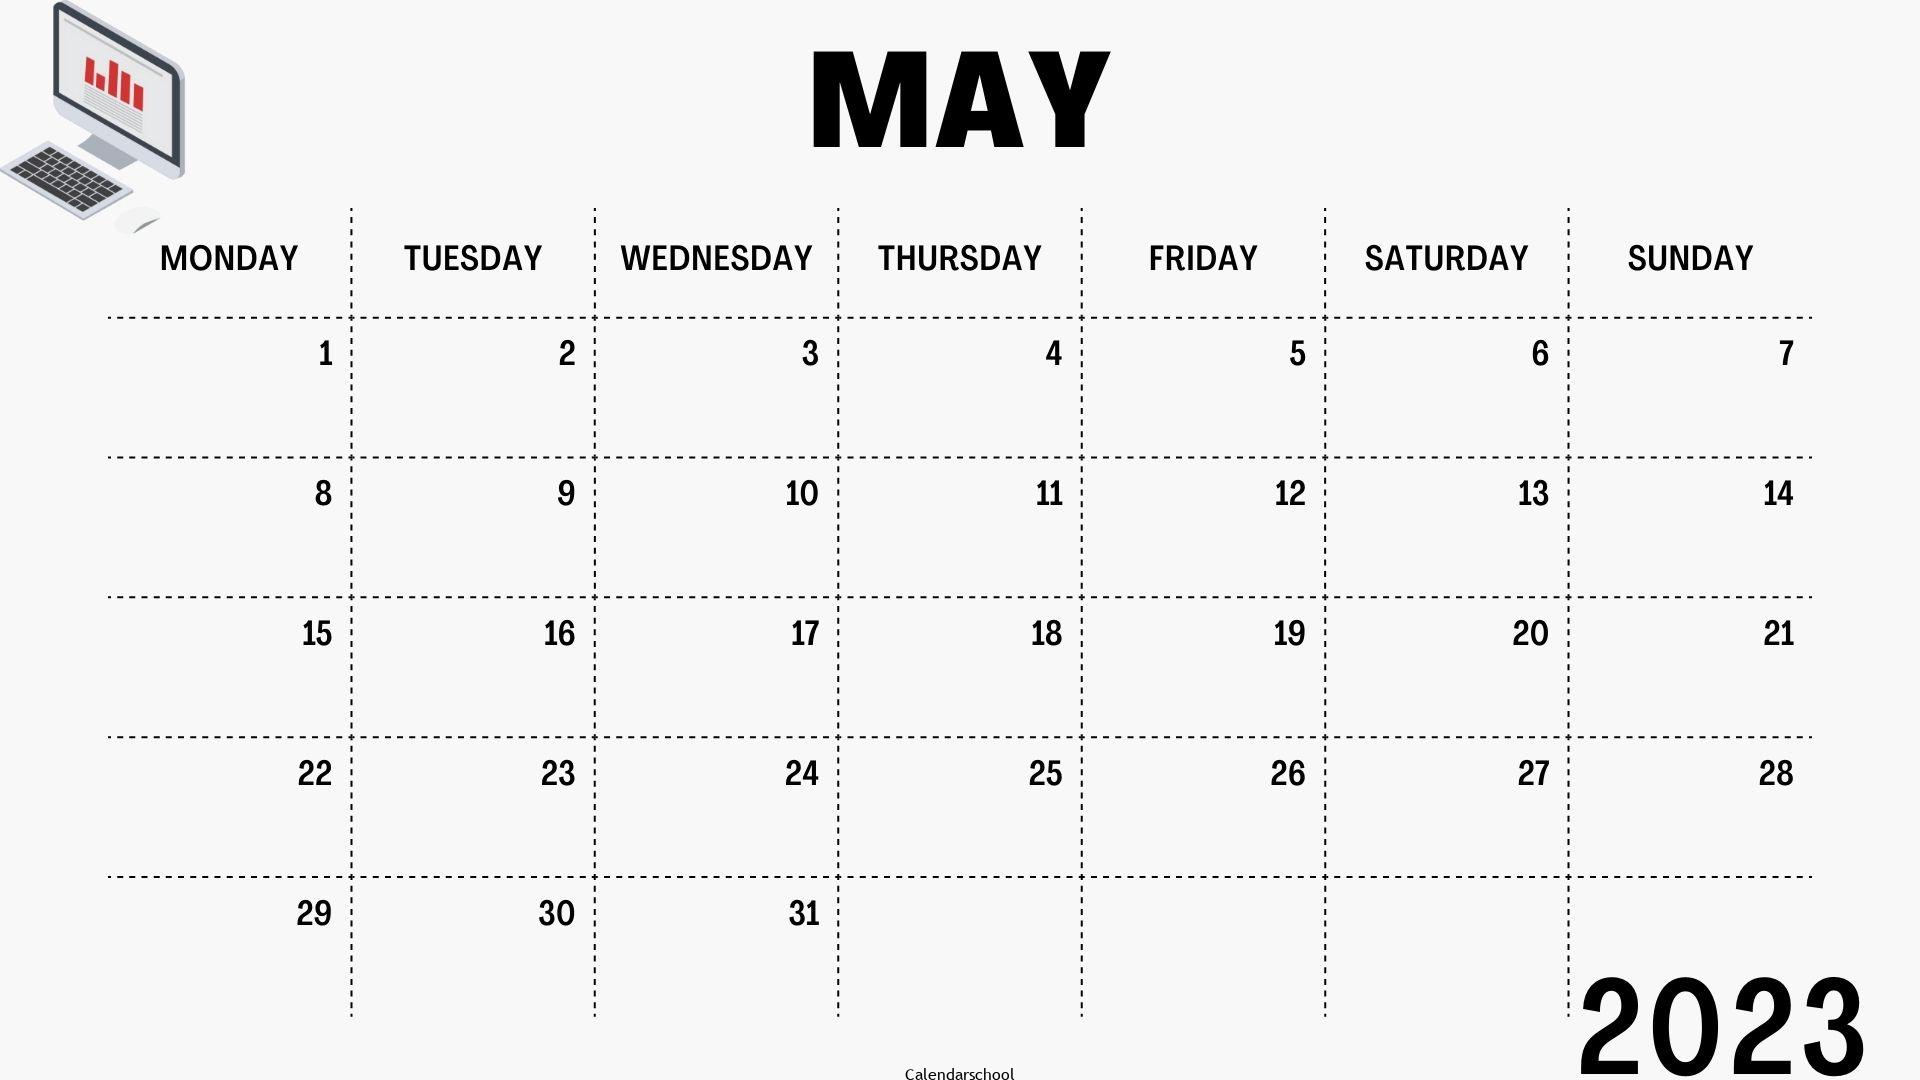 May Calendar 2023 Design Template Free Download